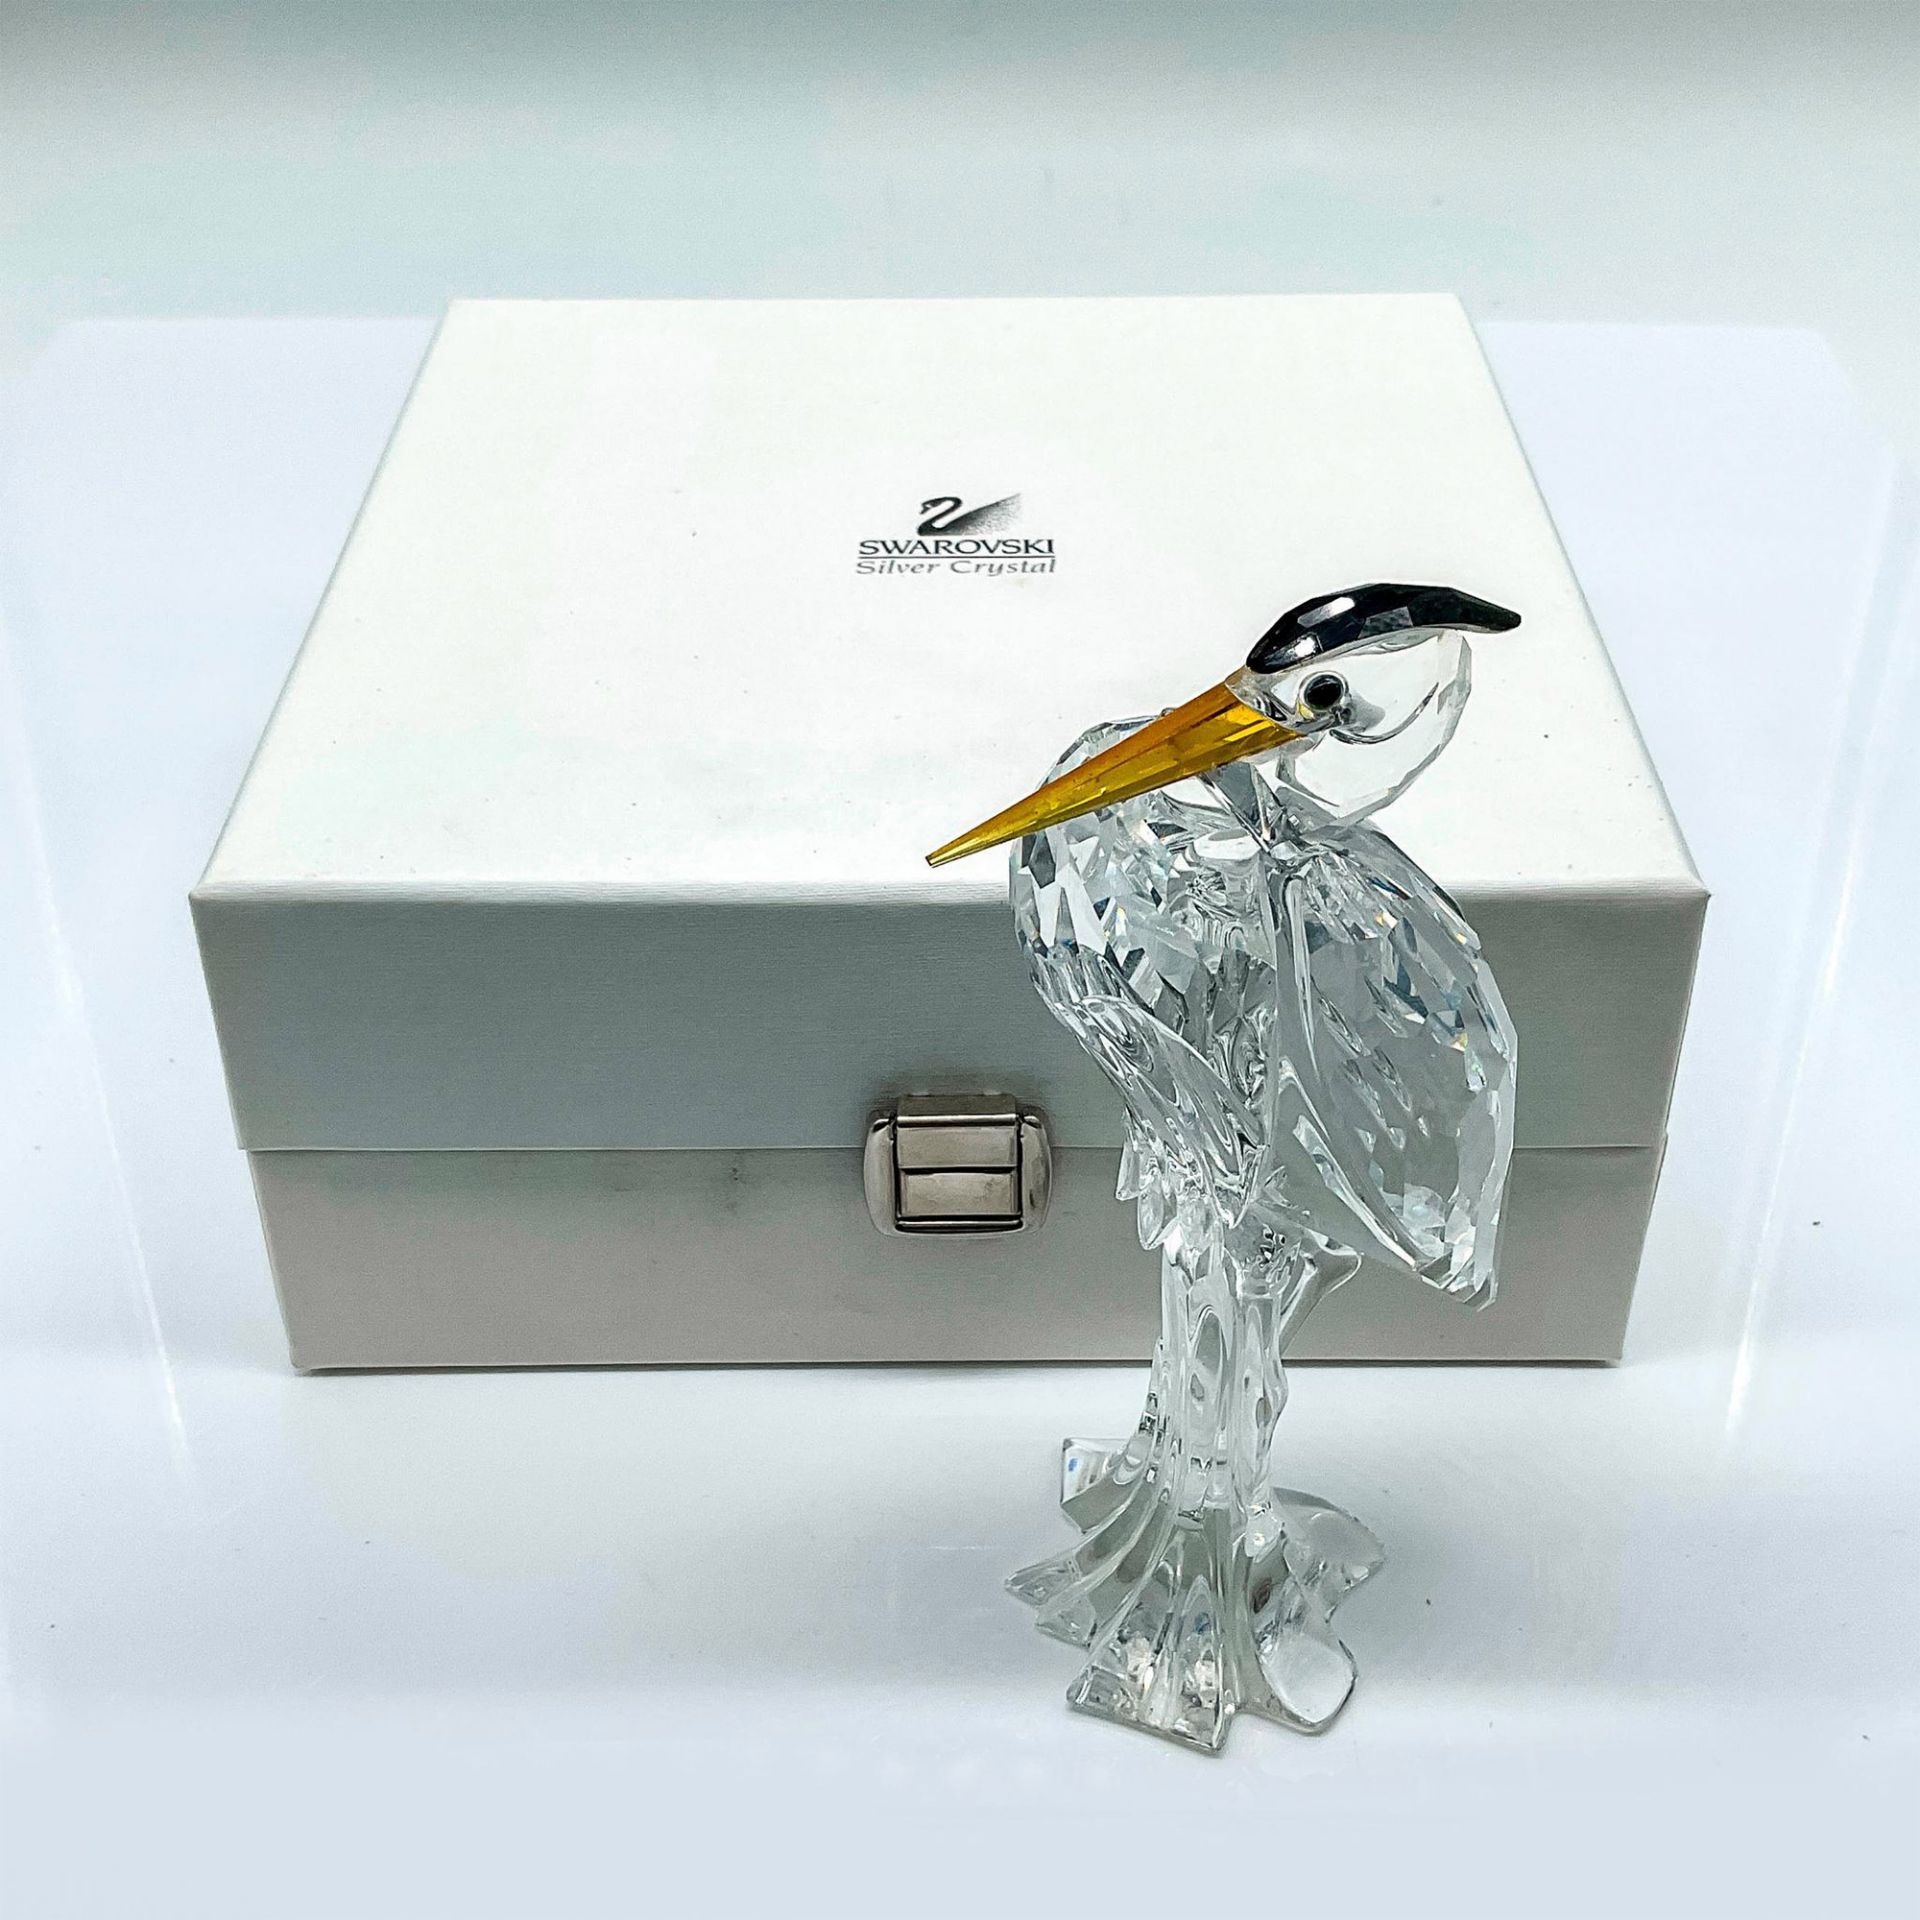 Swarovski Silver Crystal Figurine, Heron - Image 4 of 4